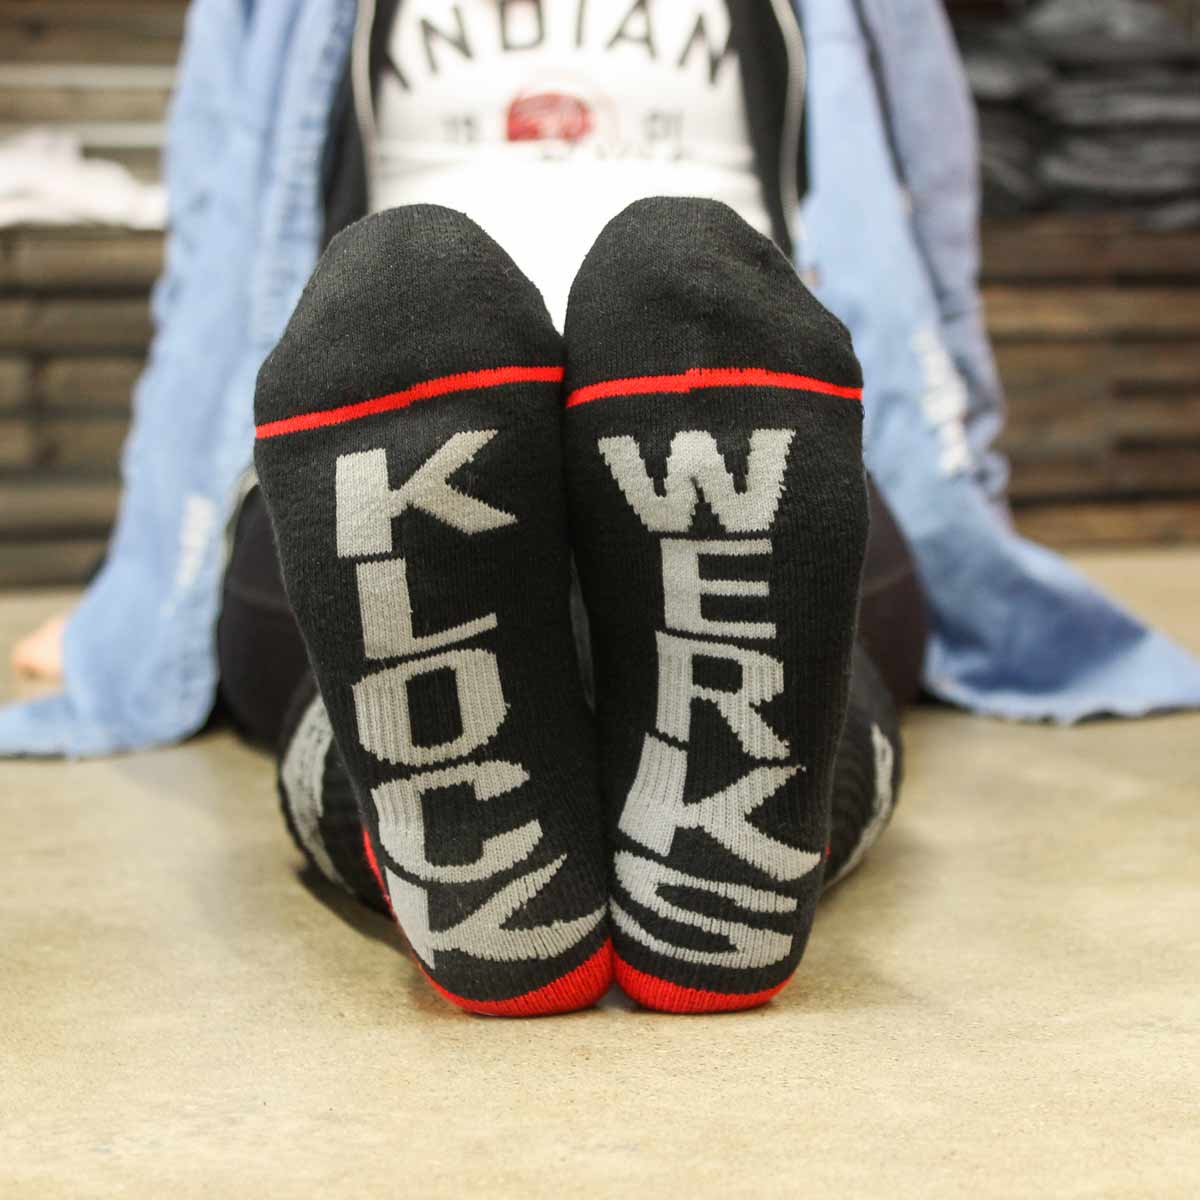 Klock Werks x Fuel Klock Socks